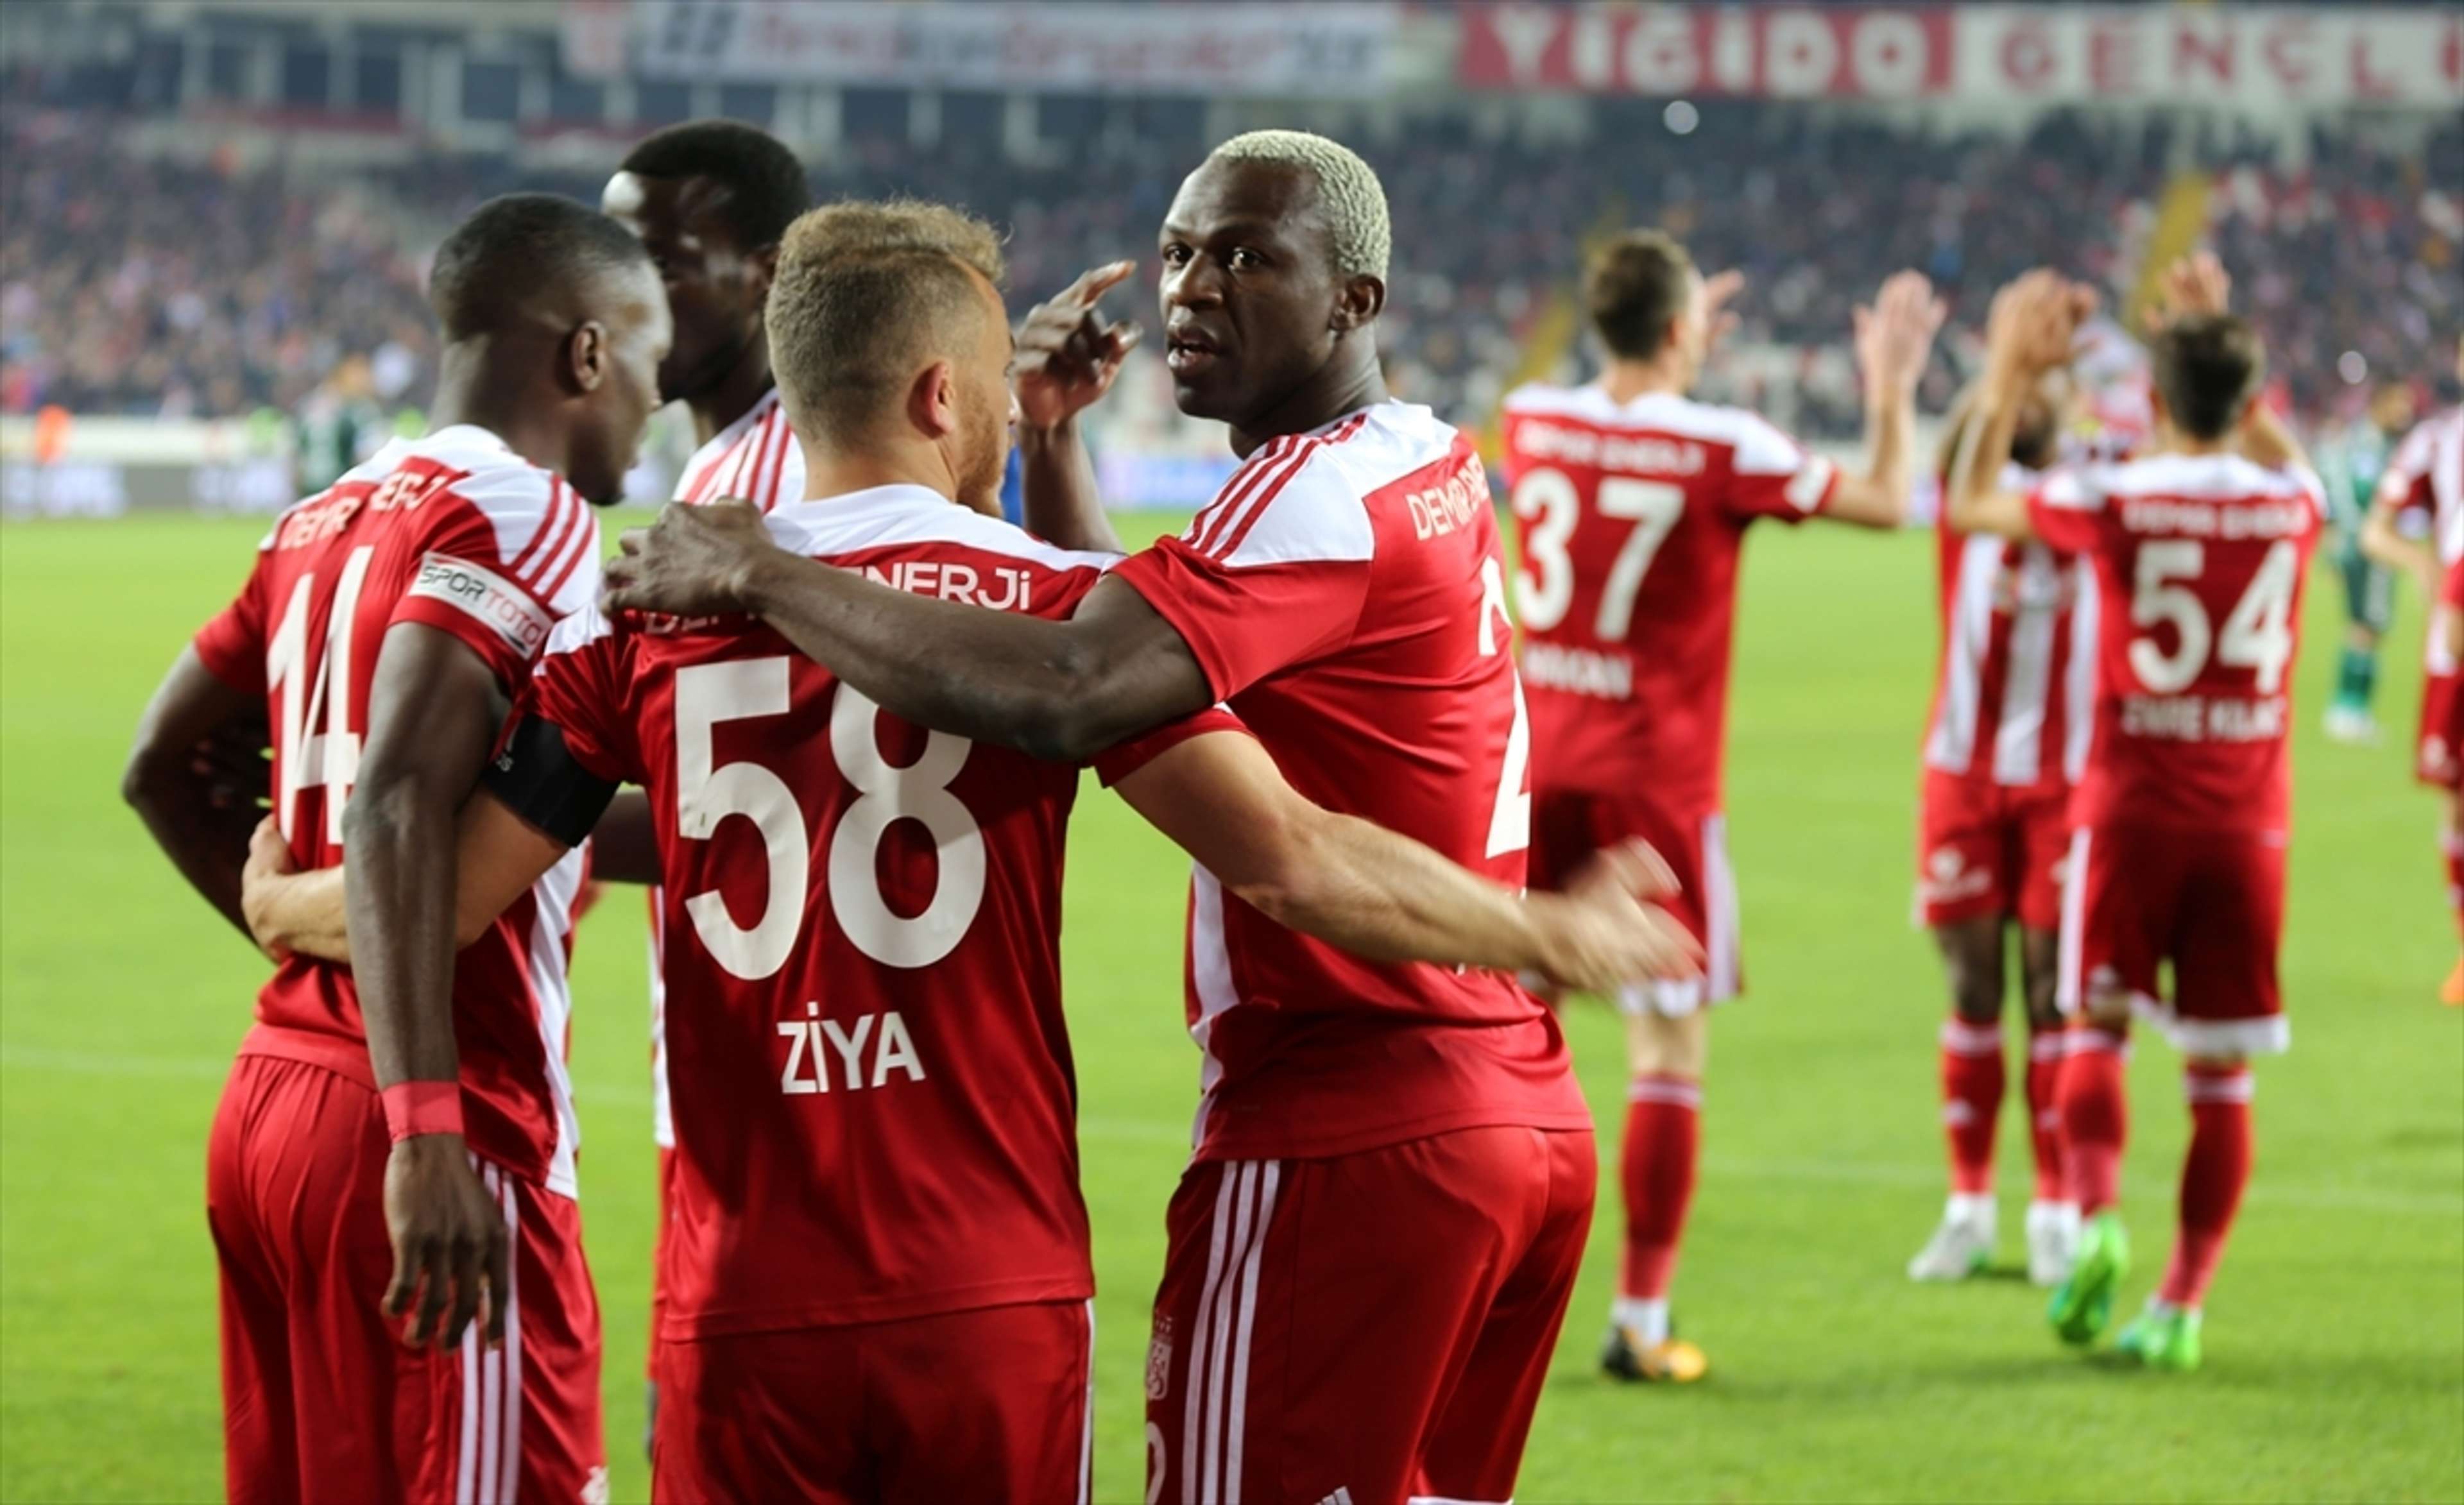 Arouna Kone Sivasspor goal celebration